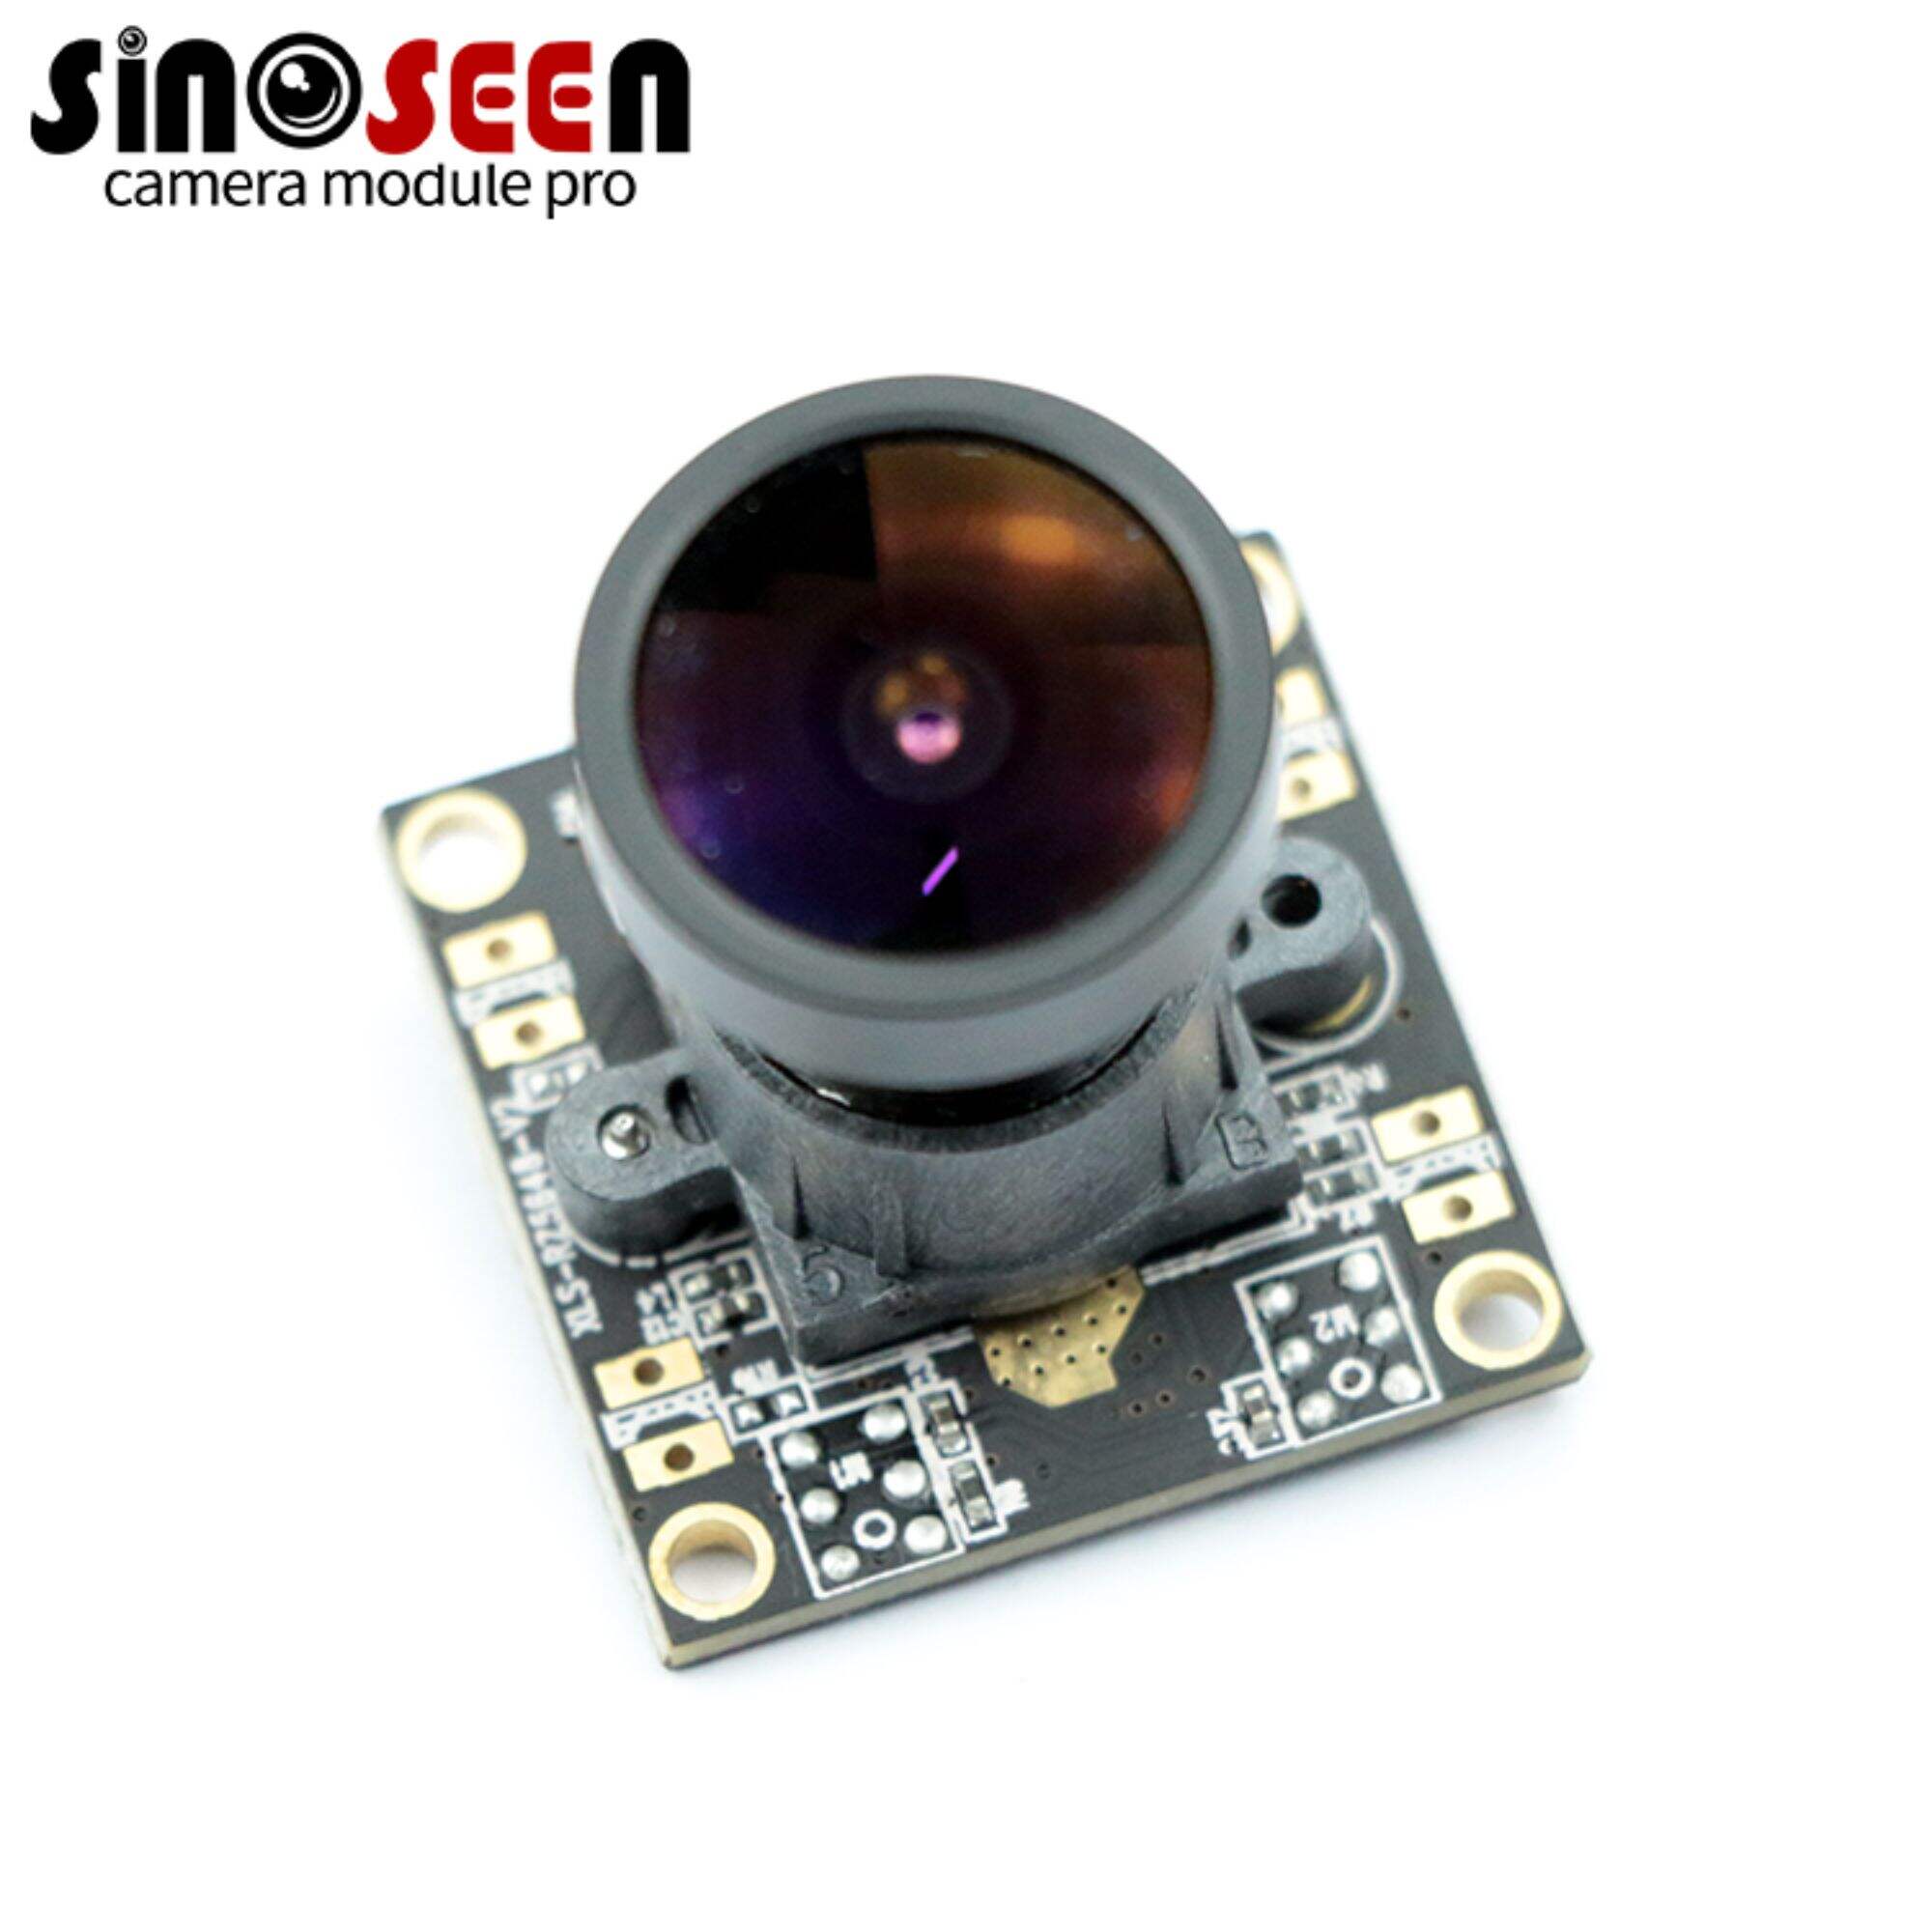 customizable camera module 0.3MP GalaxyCore GC0308 Sensor Low Power Consumption